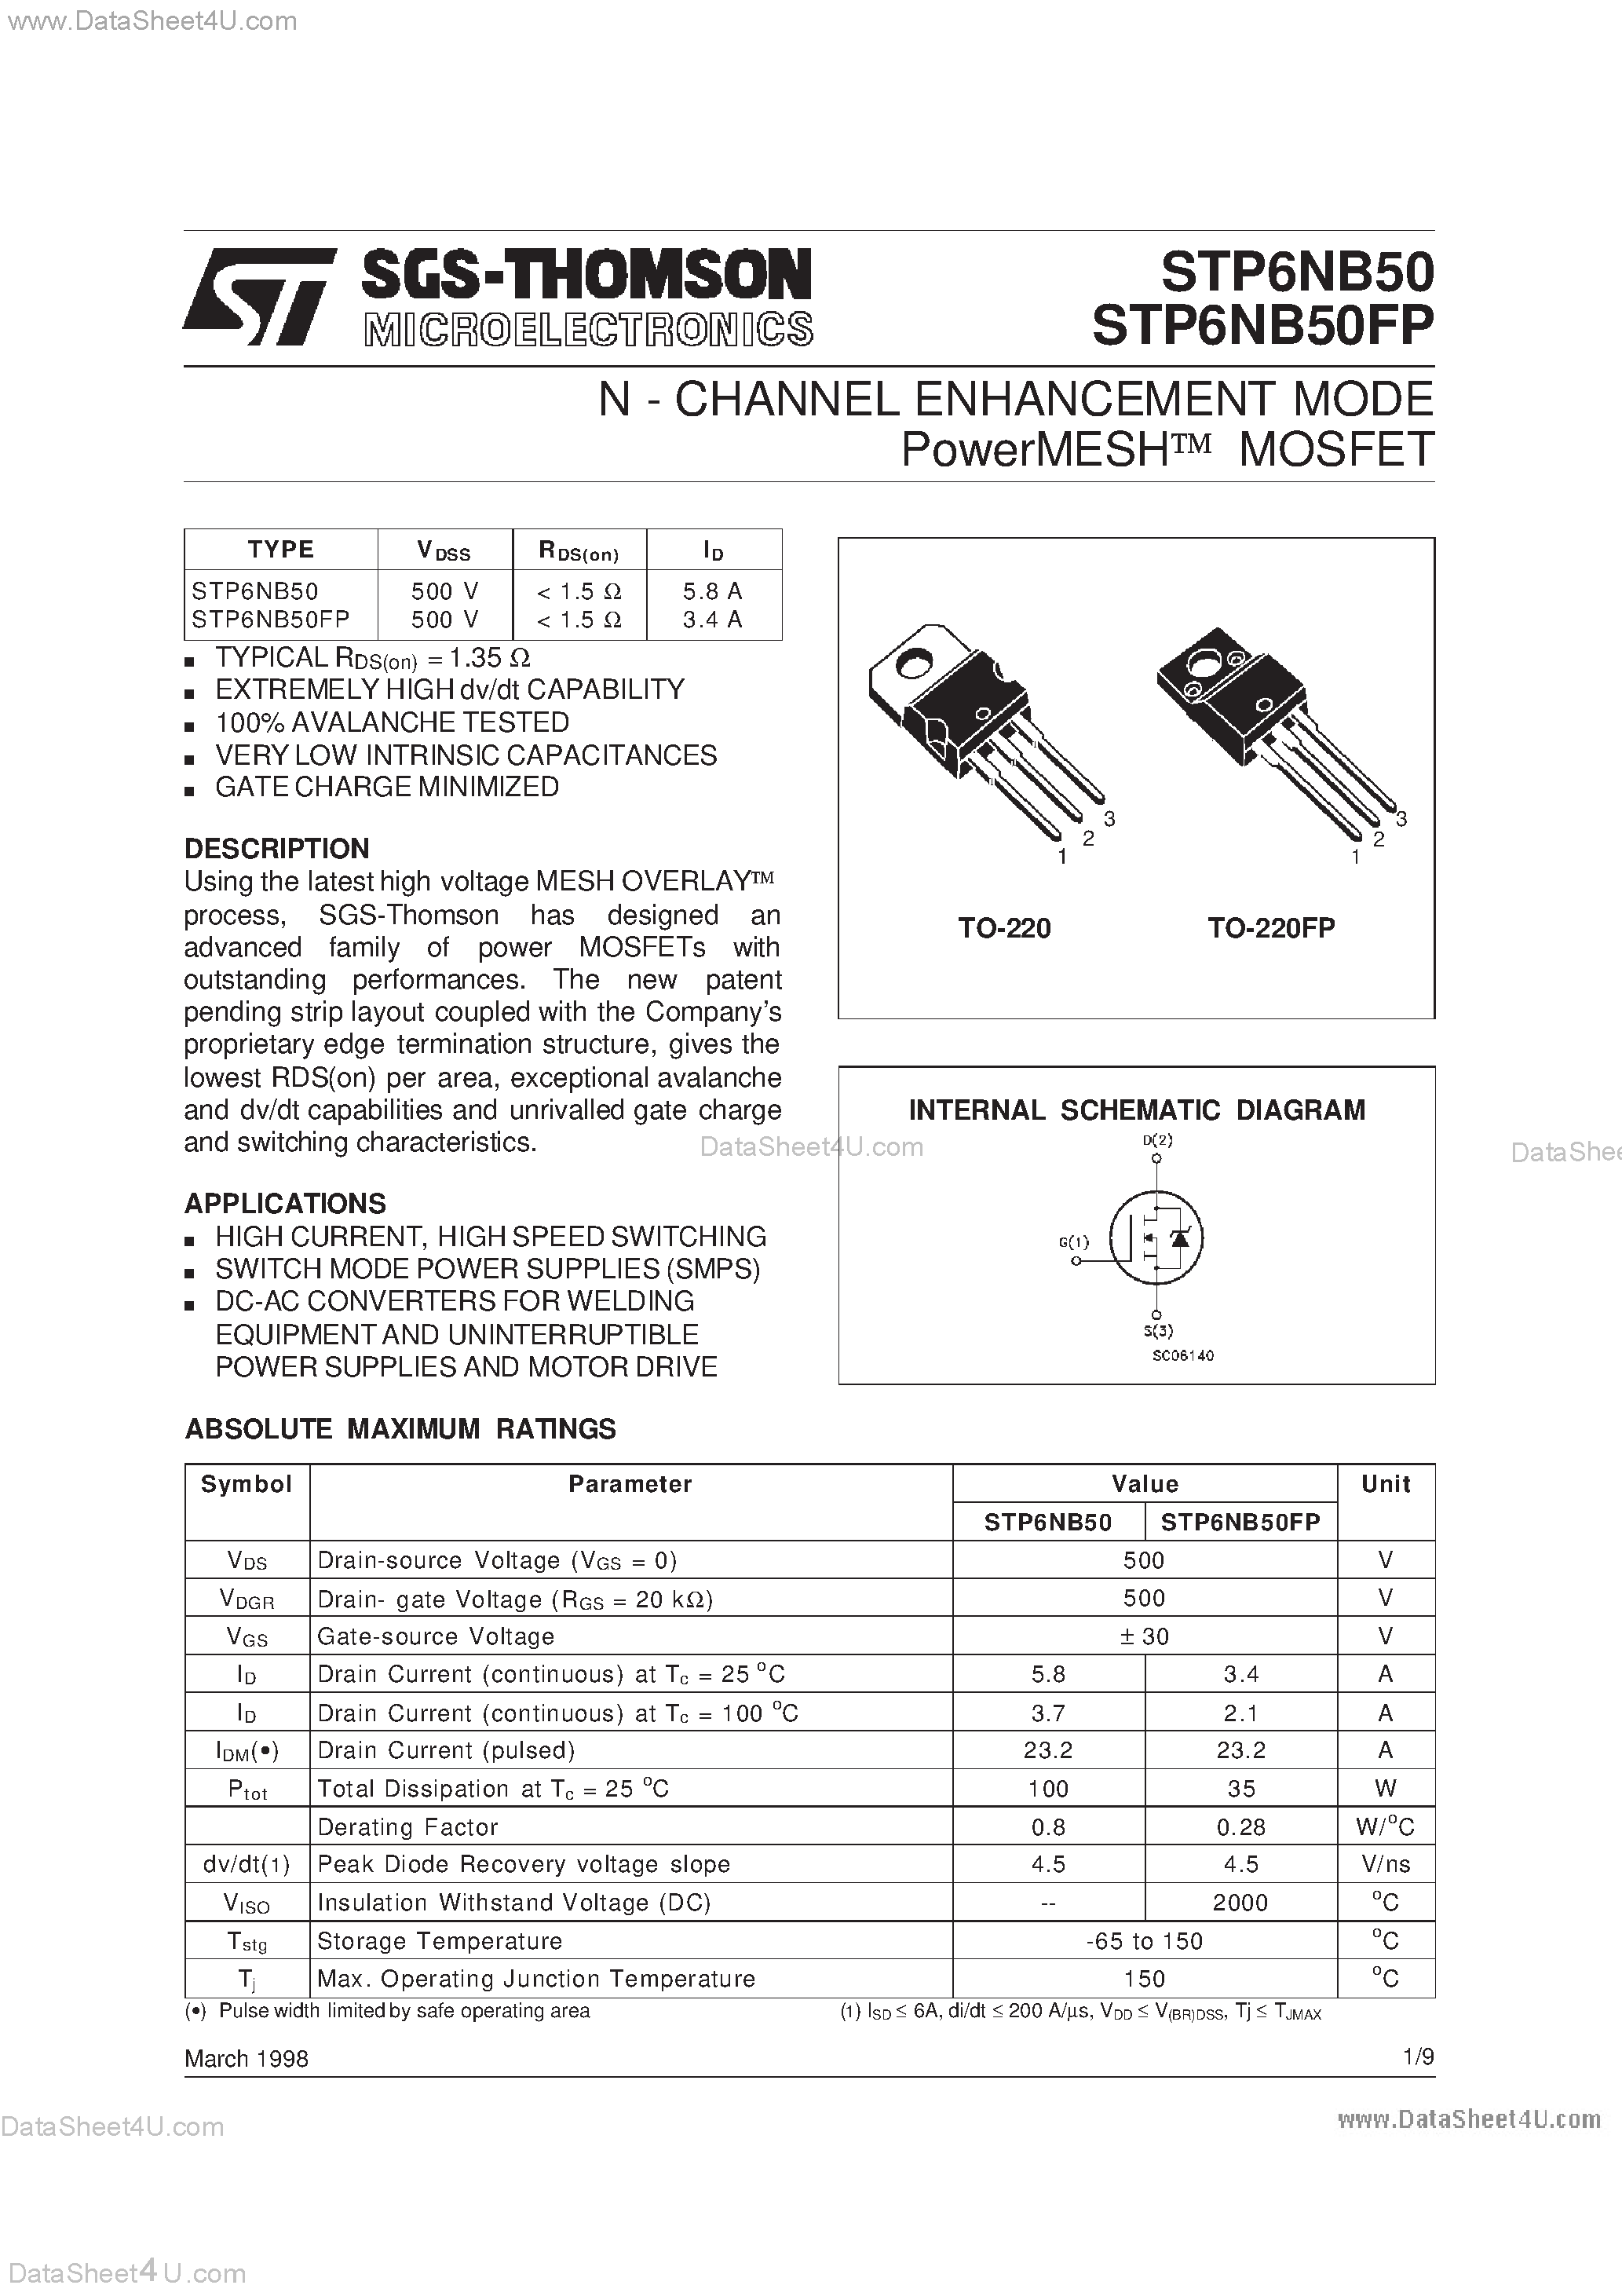 Даташит STP6NB50 - N - CHANNEL ENHANCEMENT MODE PowerMESH MOSFET страница 1